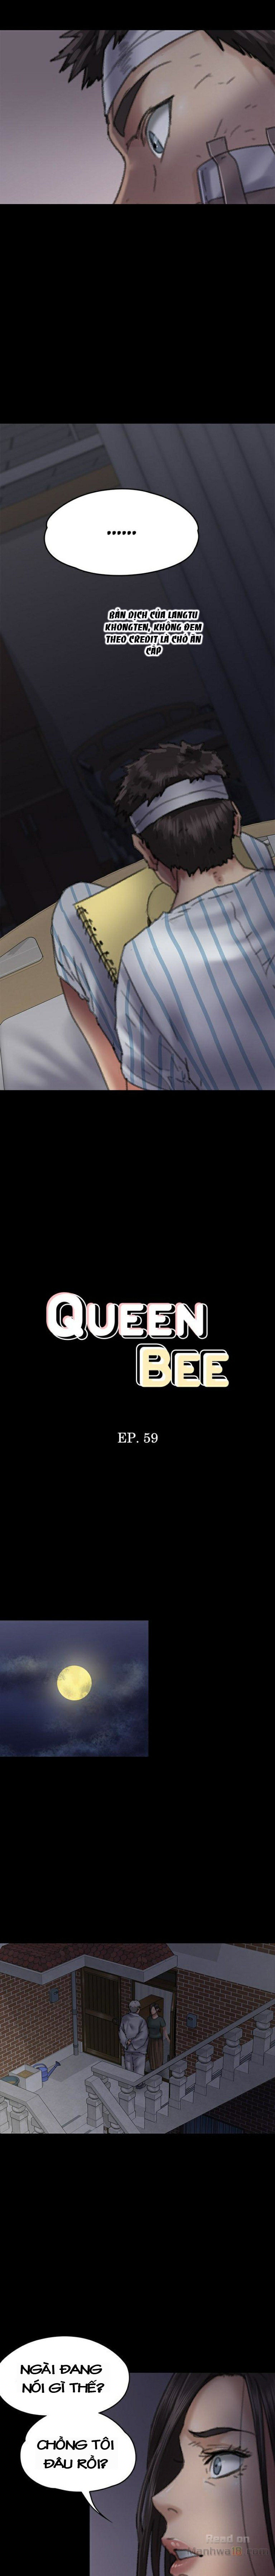 Ong Chúa (Queen Bee) Chapter 59 - Trang 3